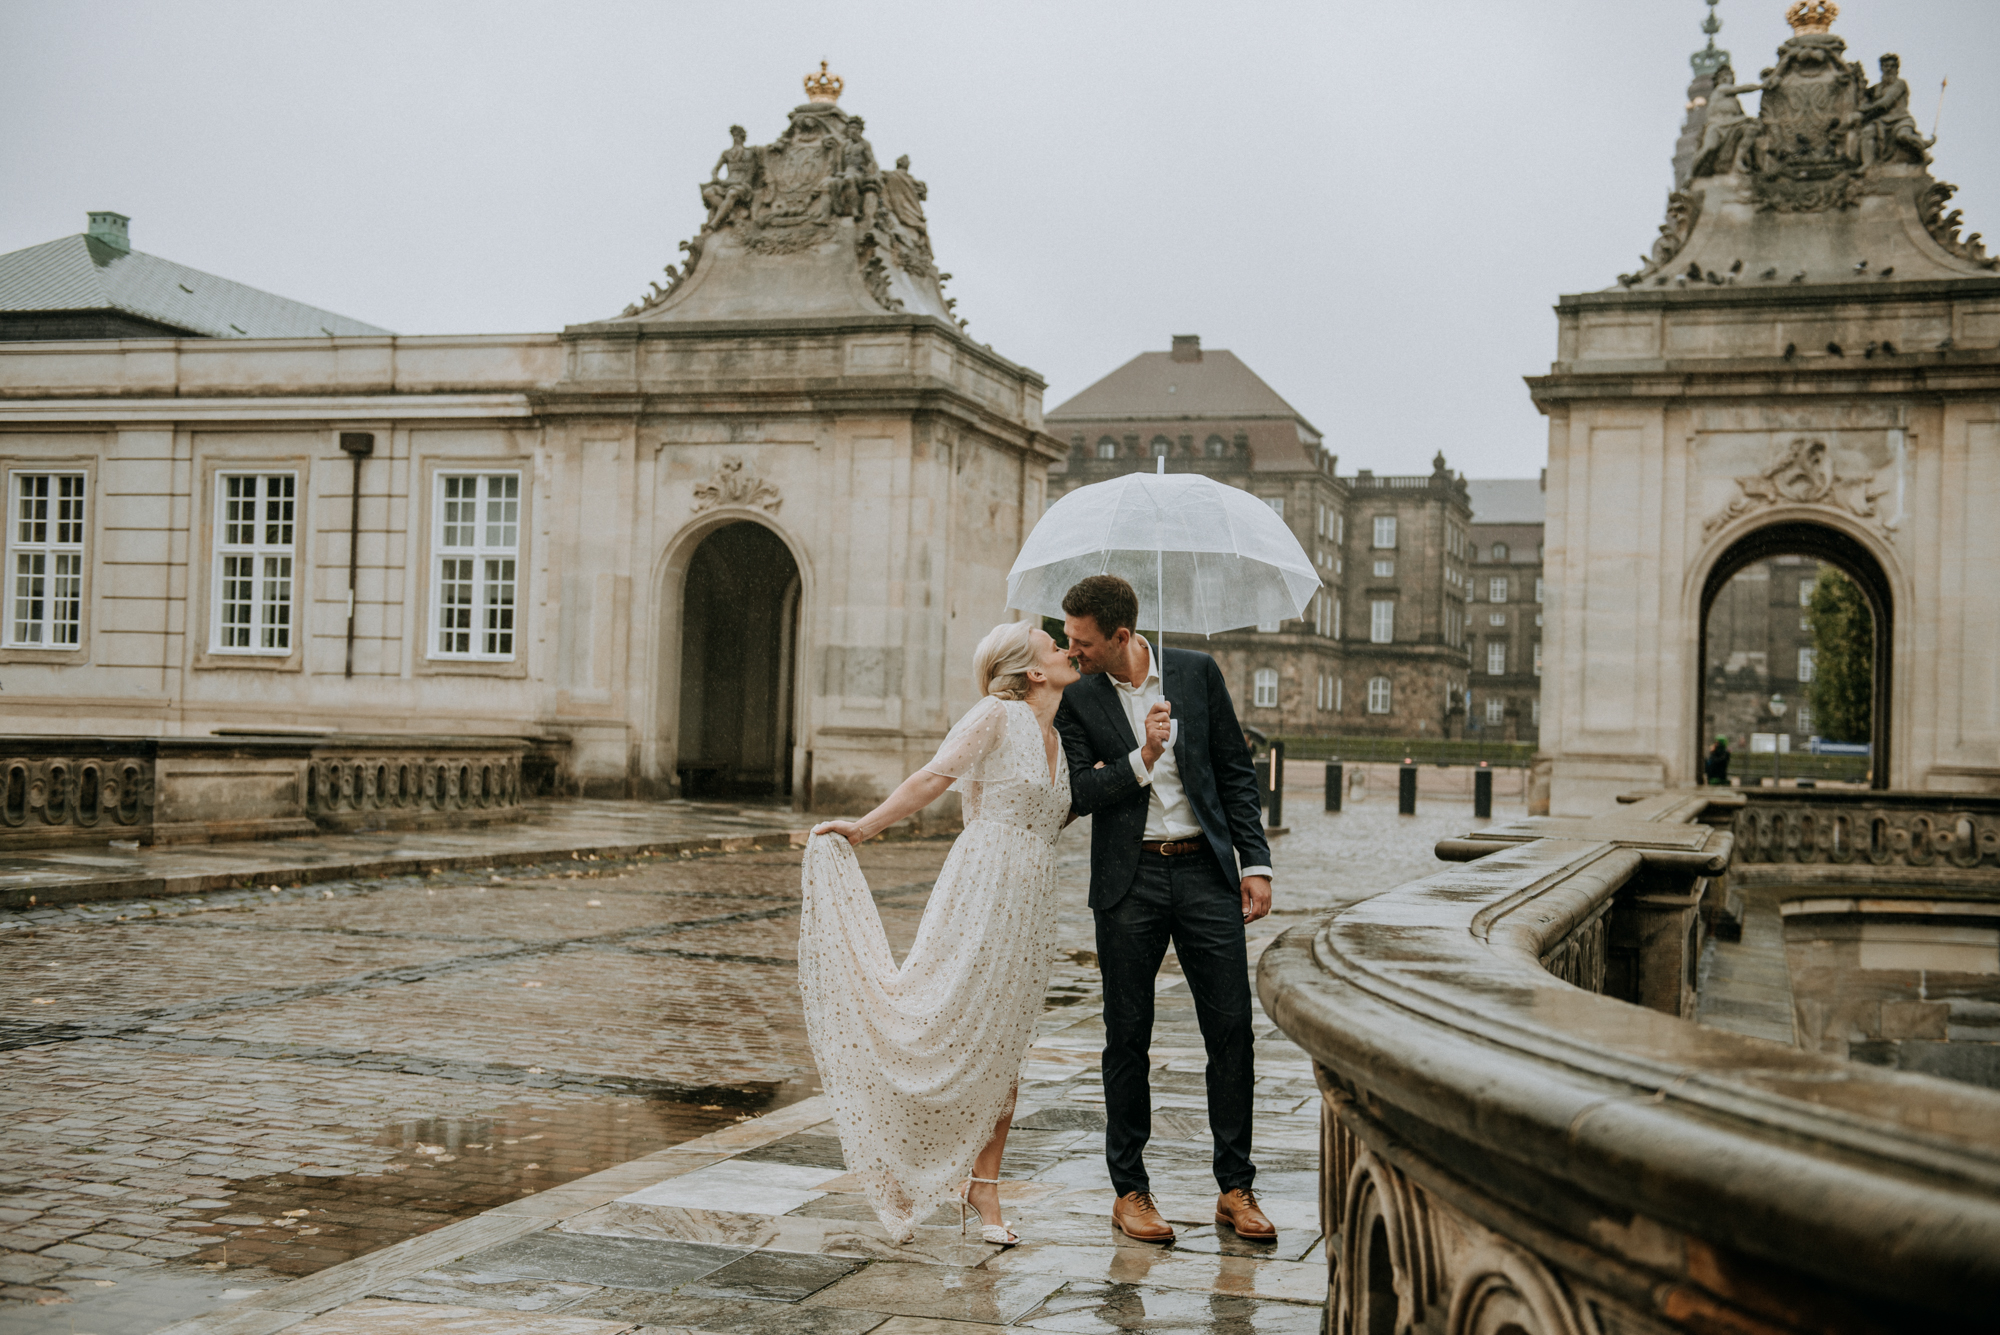 wedding photoshoot by the castle in Copenhagen